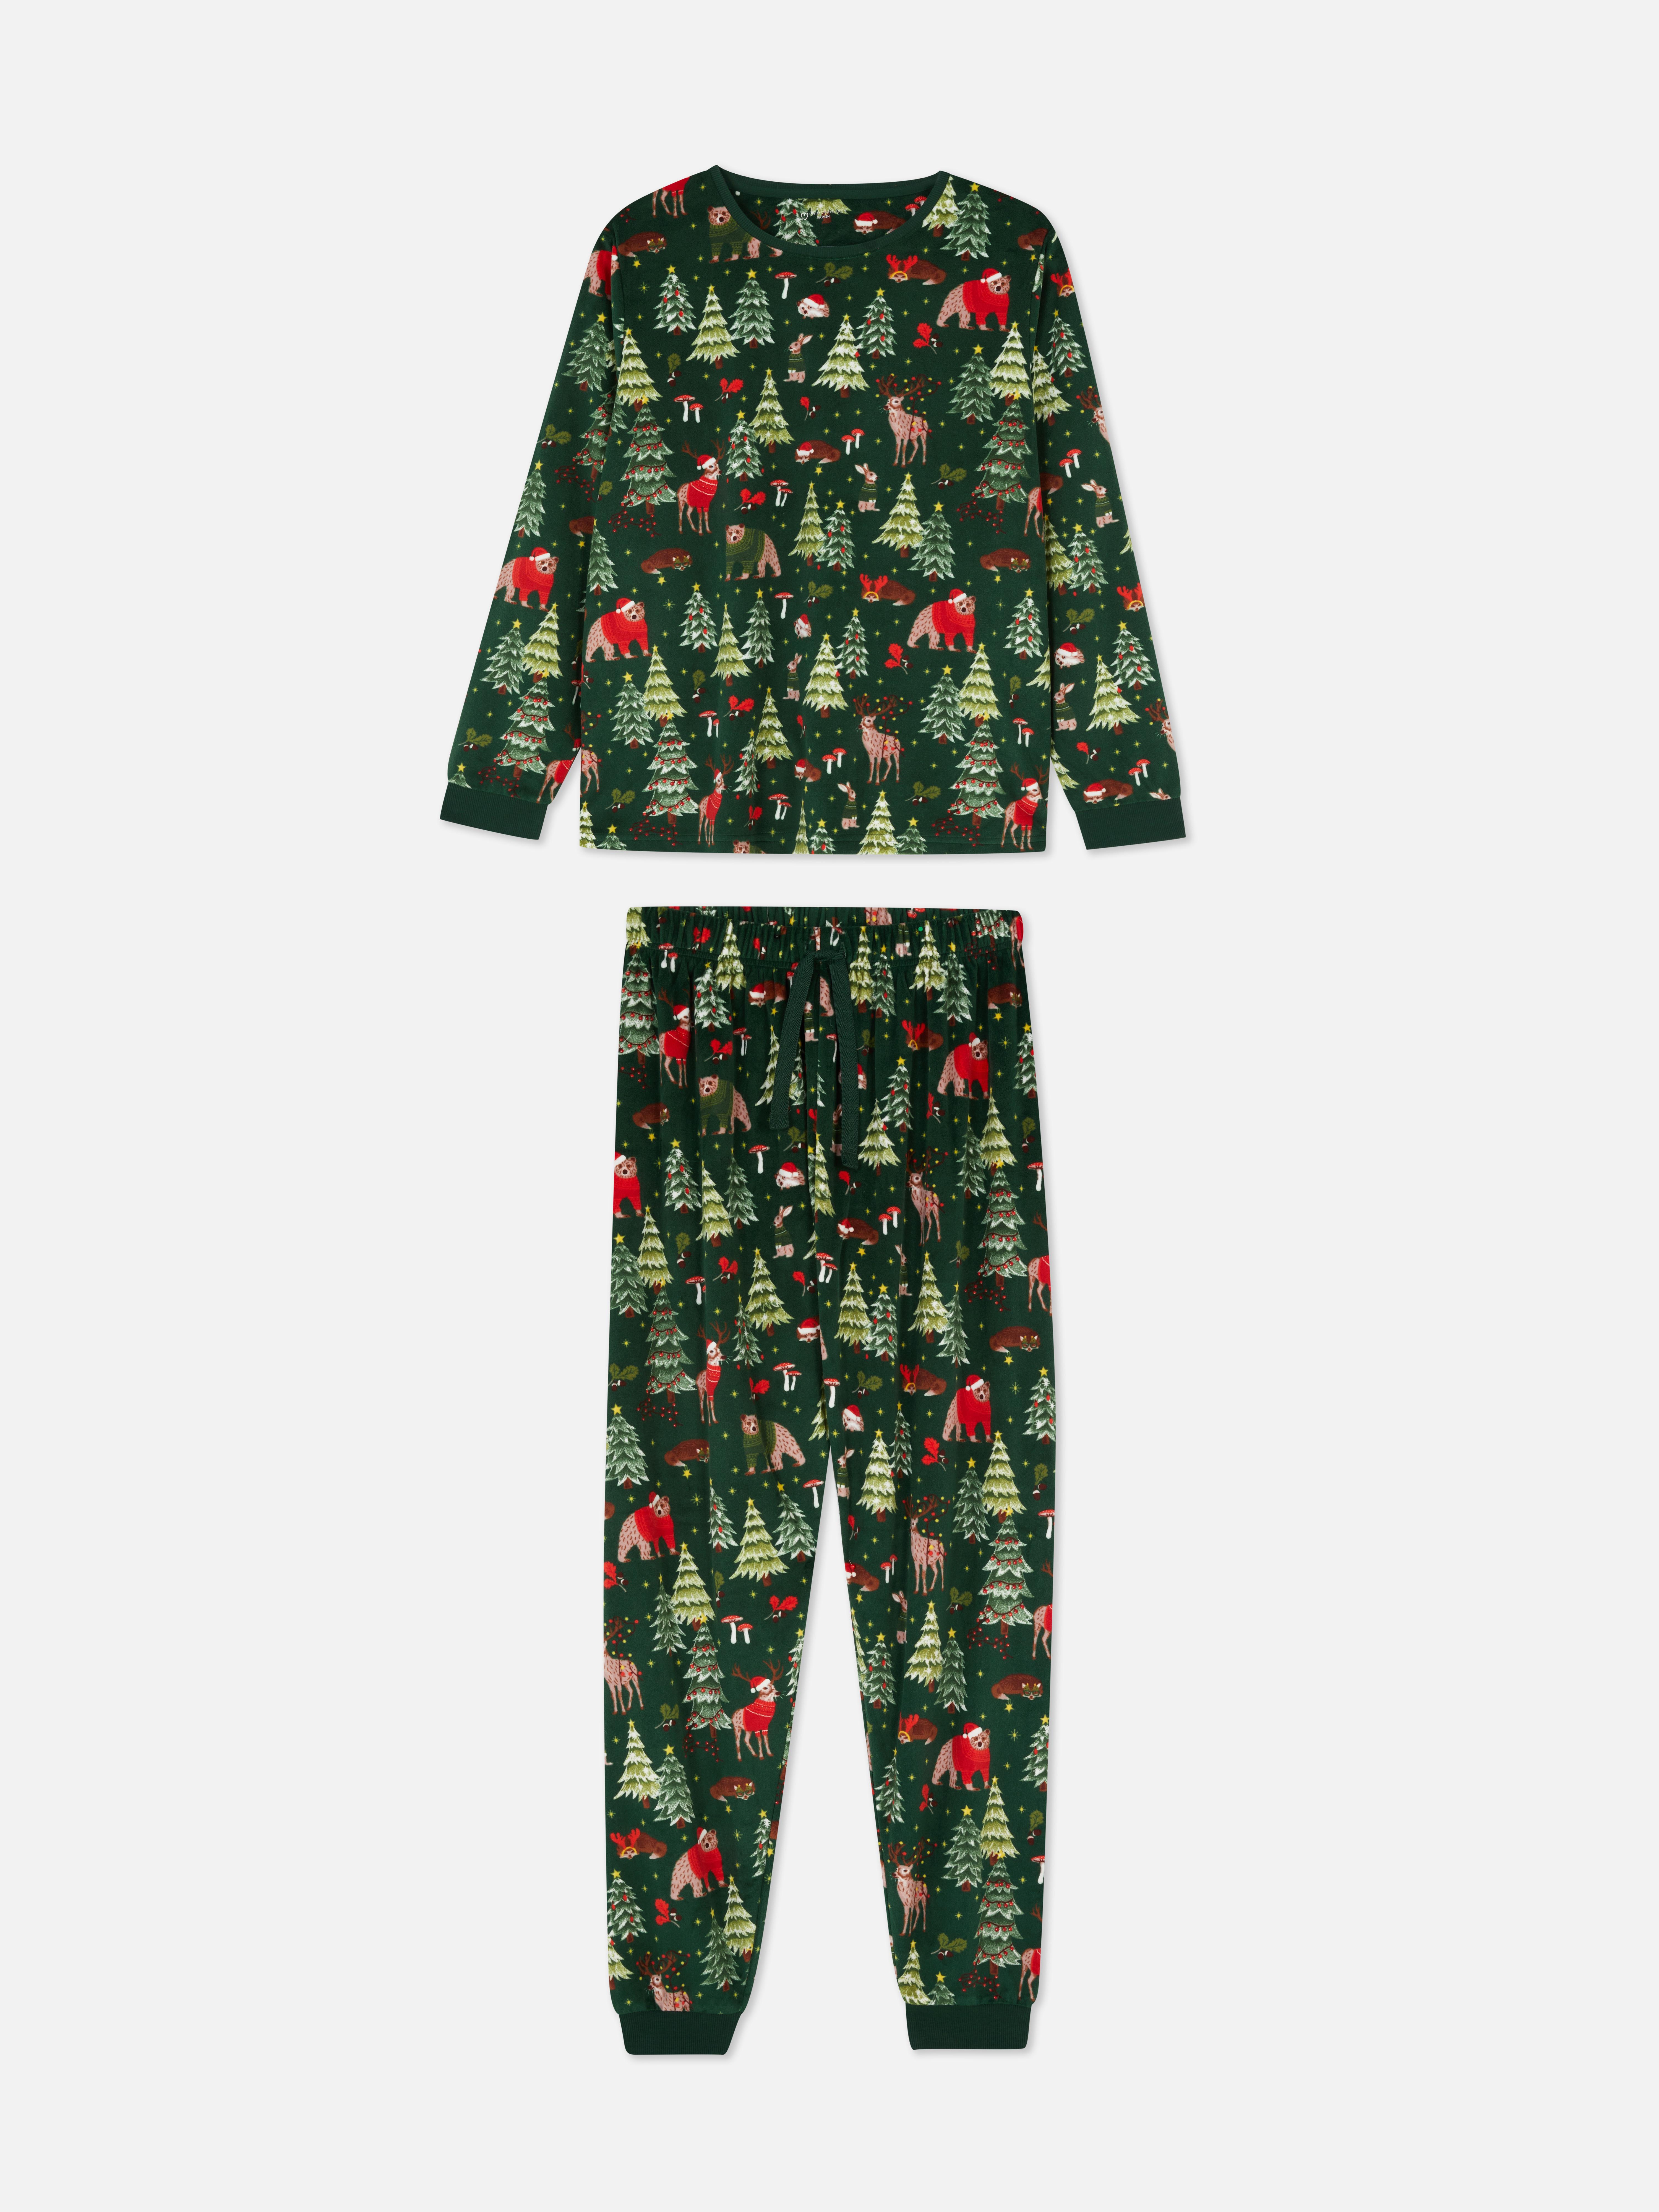 Pijama família Natal estampado bosque mulher